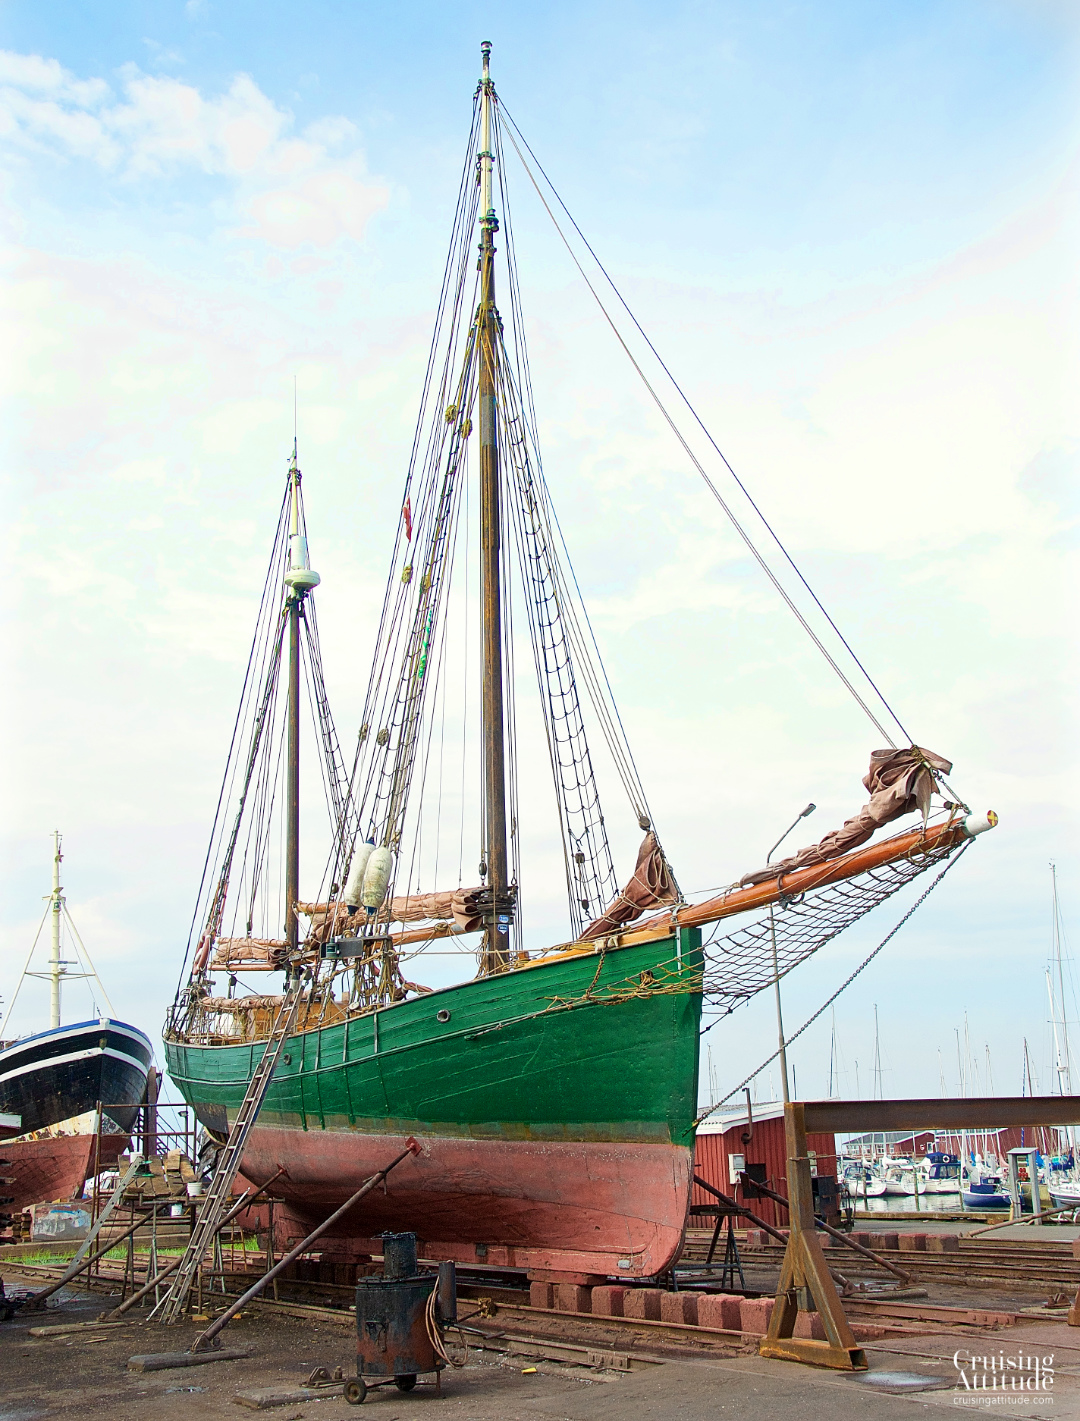 Gilleleje Harbour, Denmark | Cruising Attitude Sailing Blog - Discovery 55